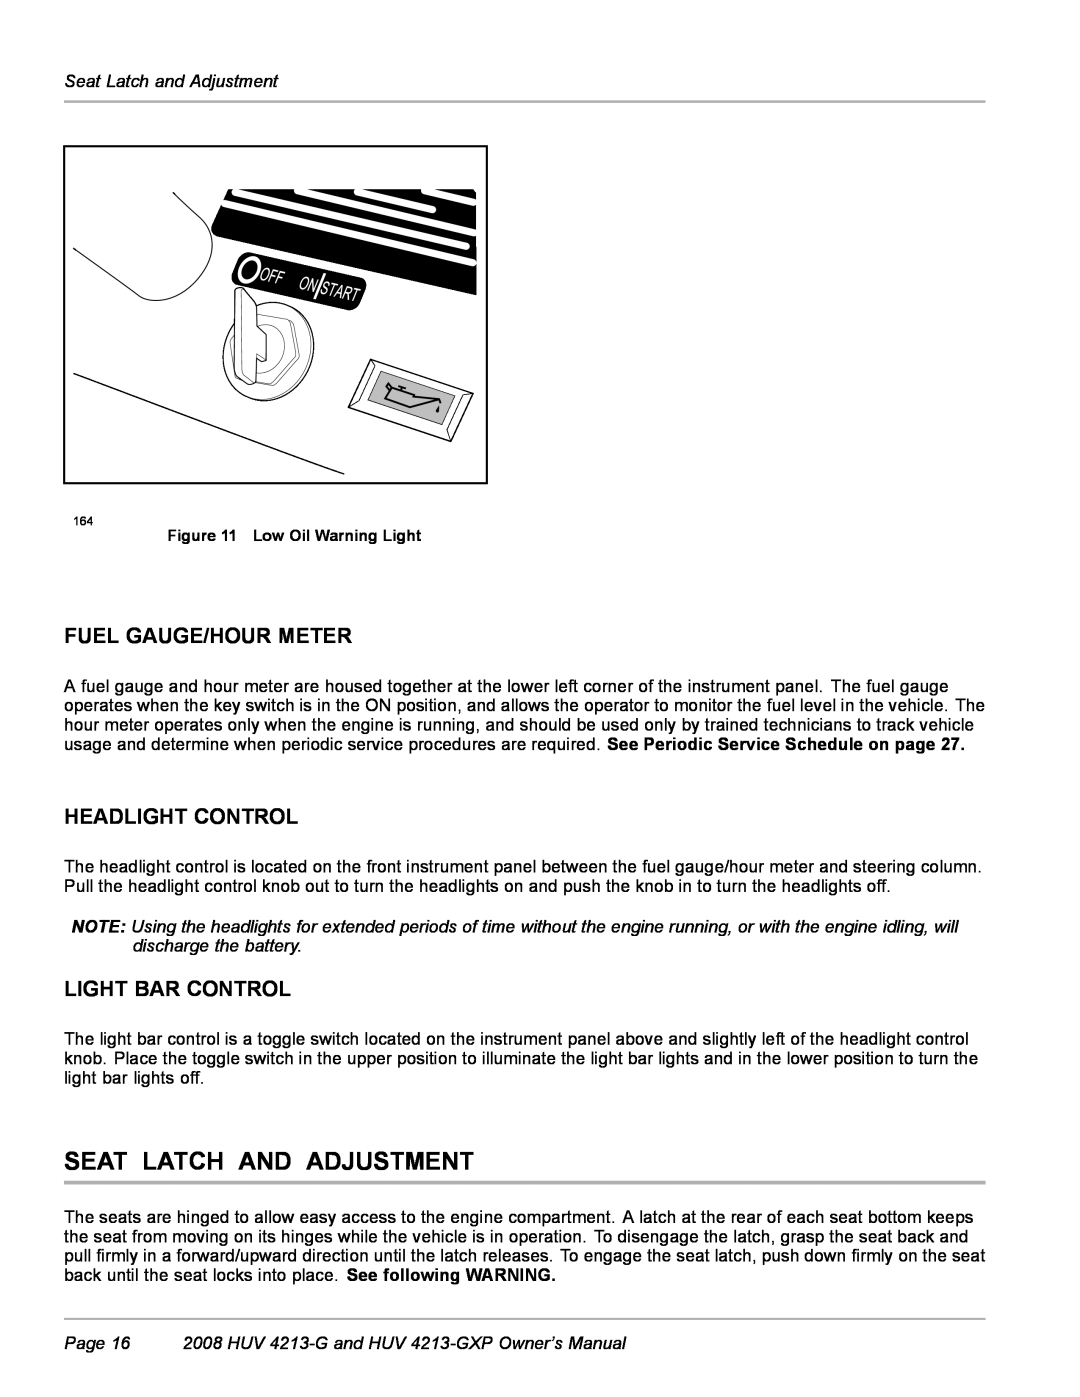 Husqvarna HUV 4213-GXP Seat Latch And Adjustment, Fuel Gauge/Hour Meter, Headlight Control, Light Bar Control 